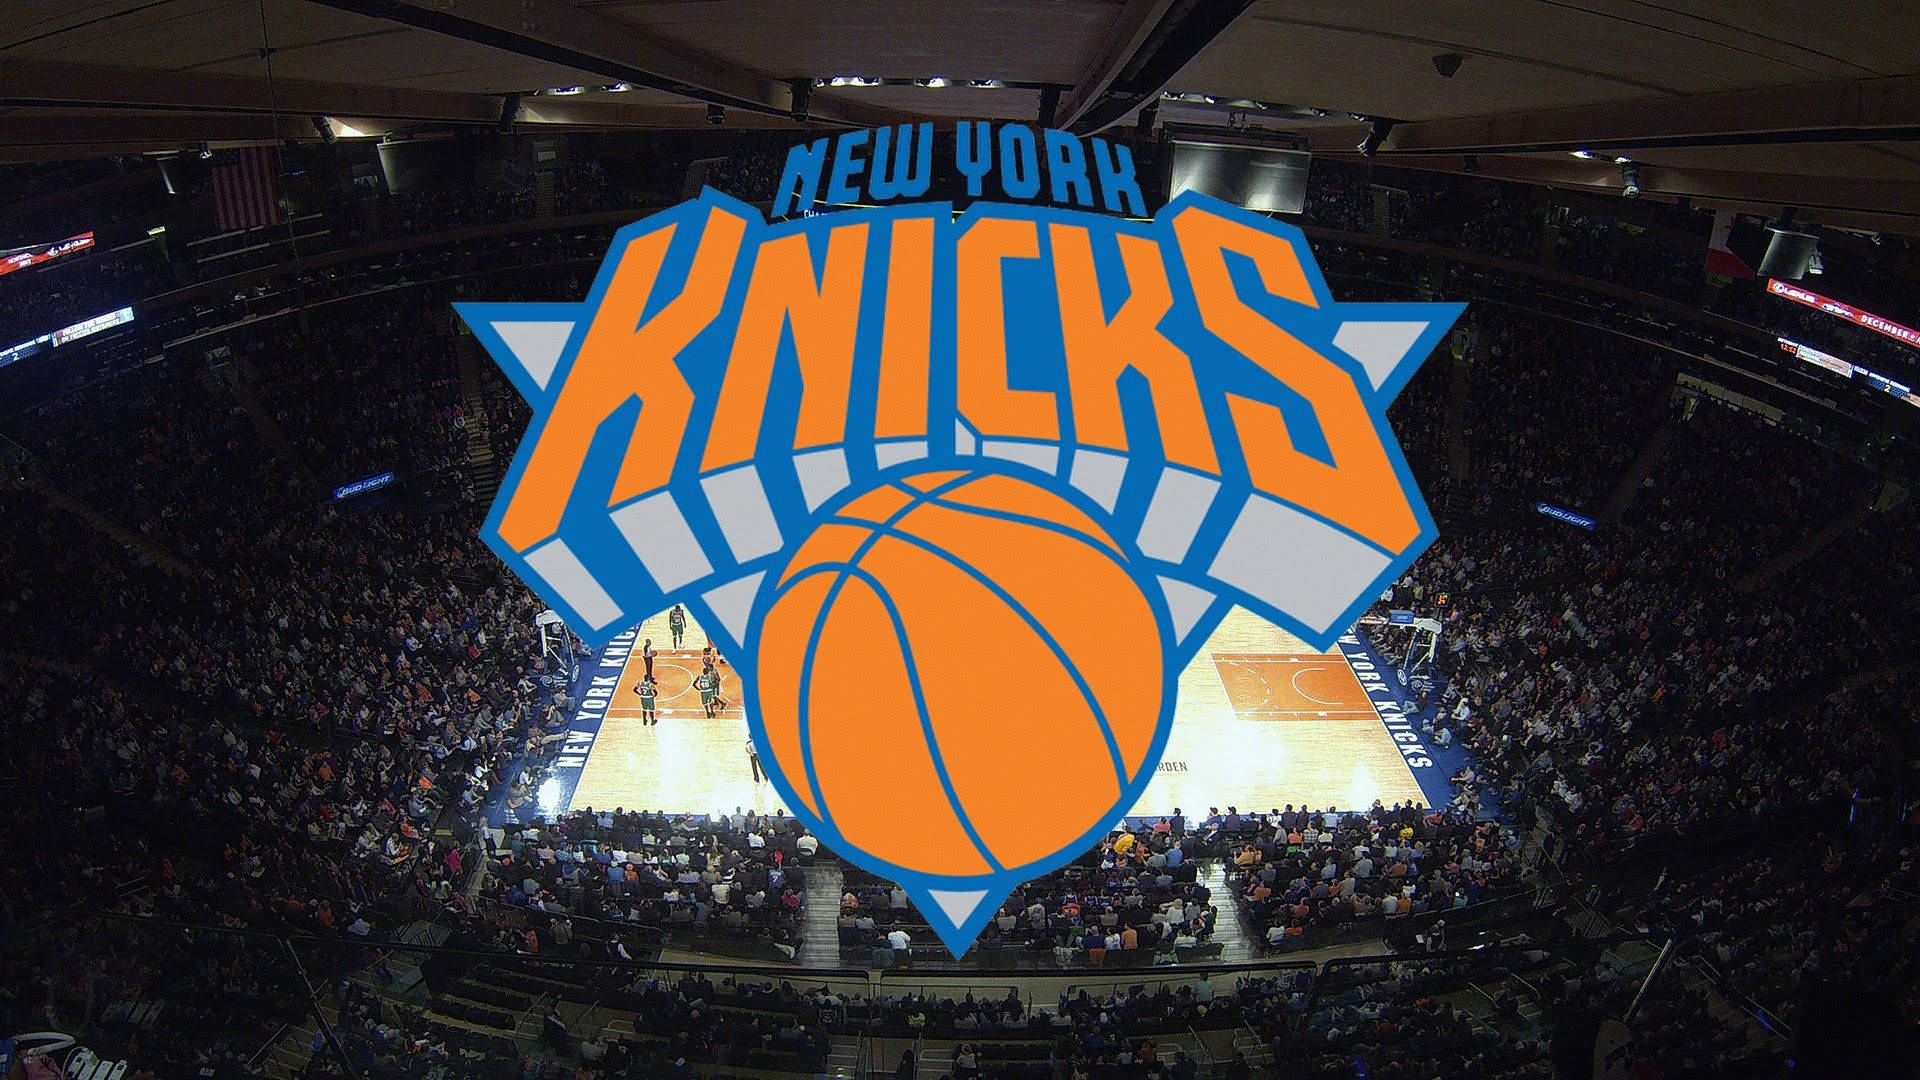 New York Knicks Arena